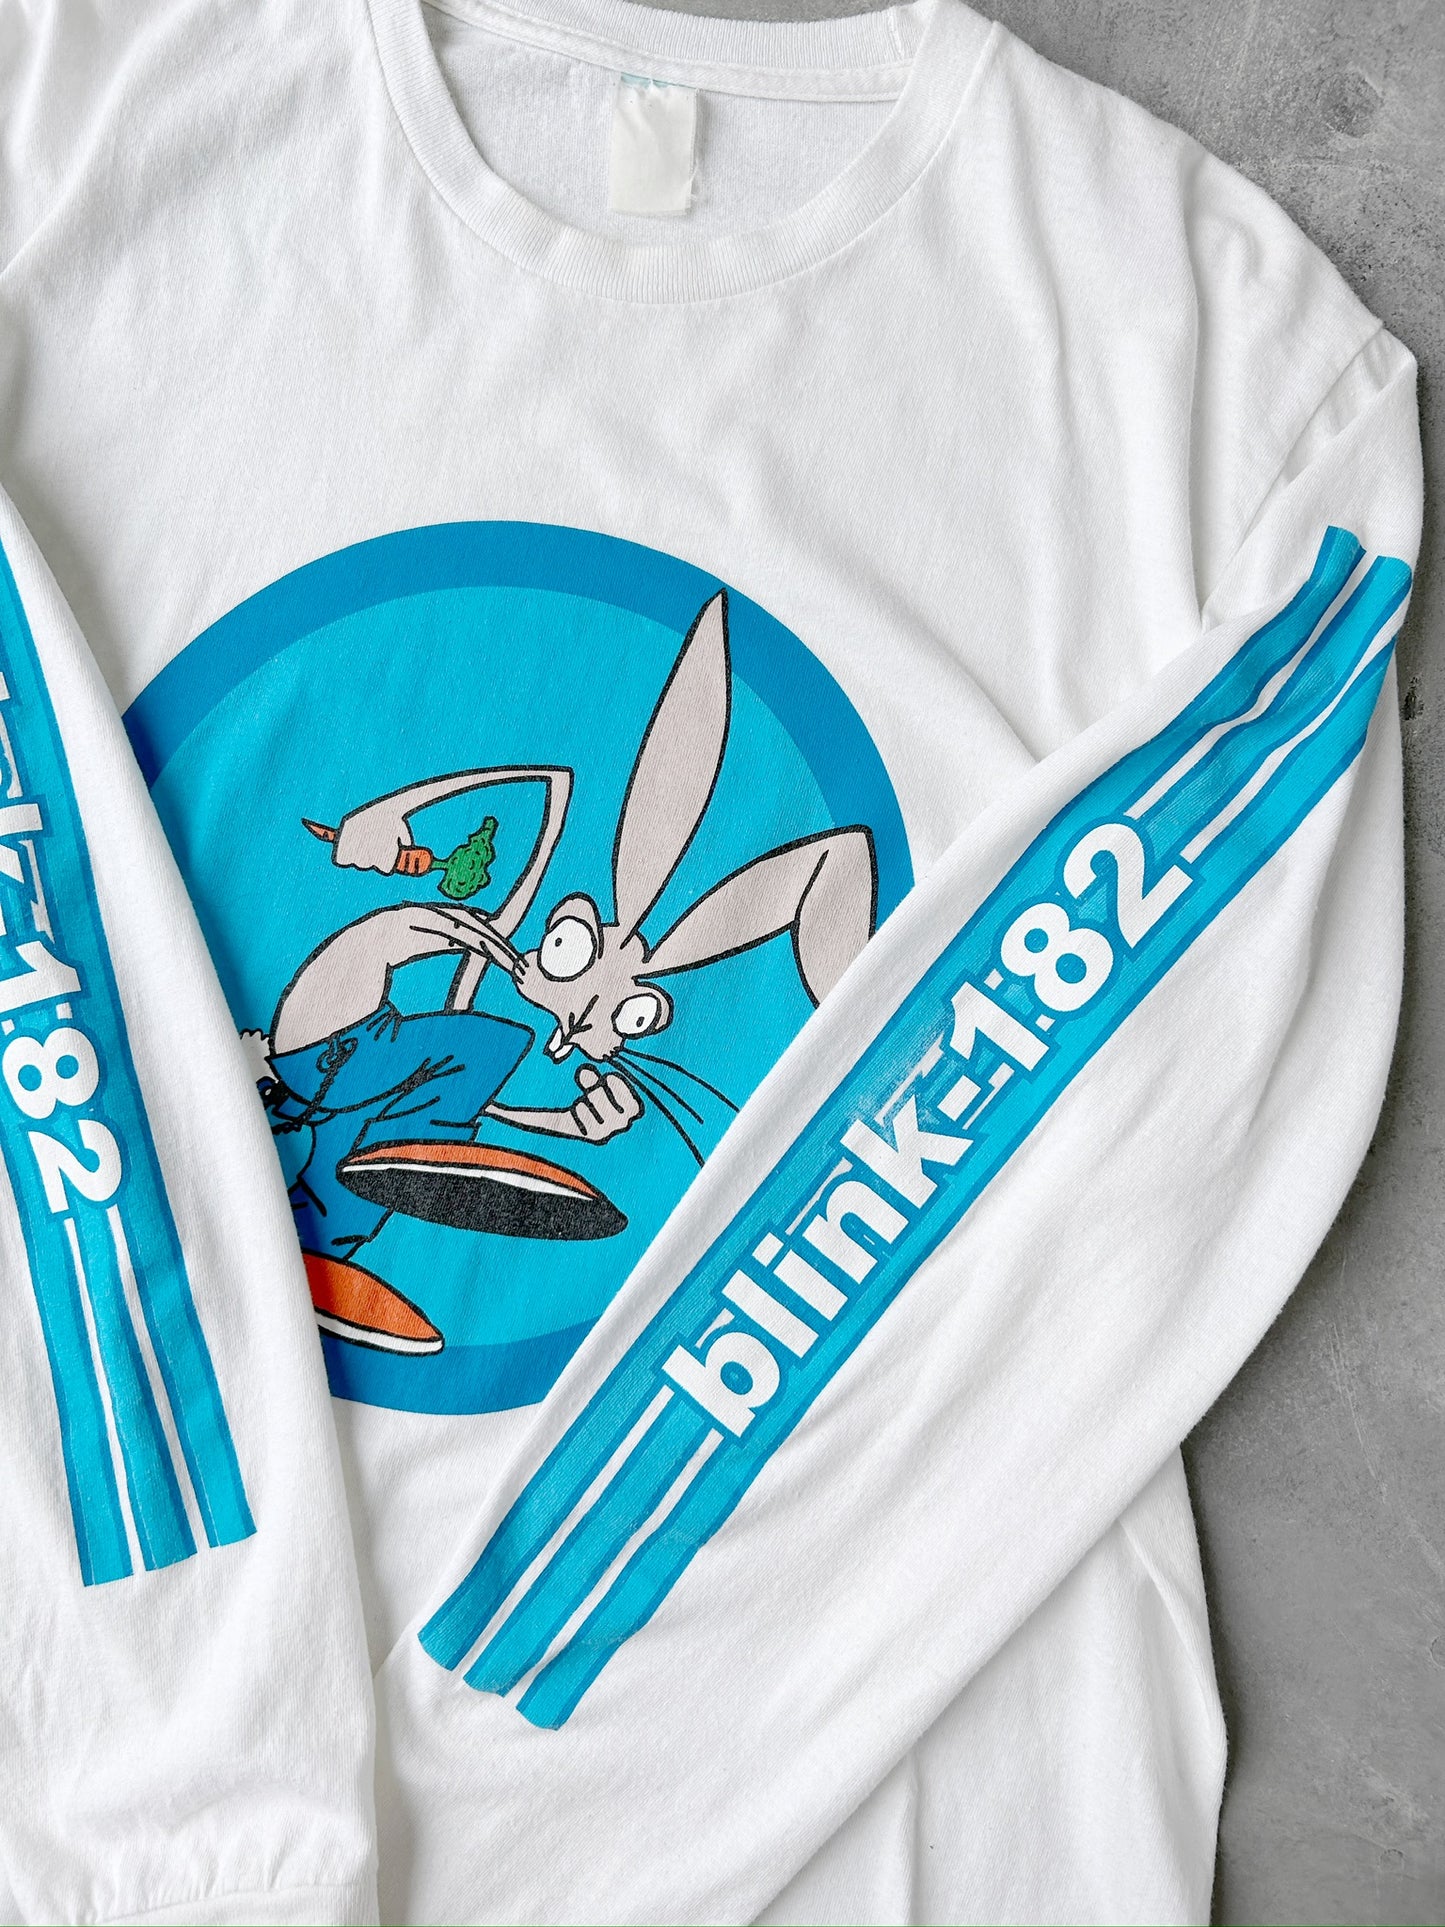 Blink-182 T-Shirt 90's - Medium / Large